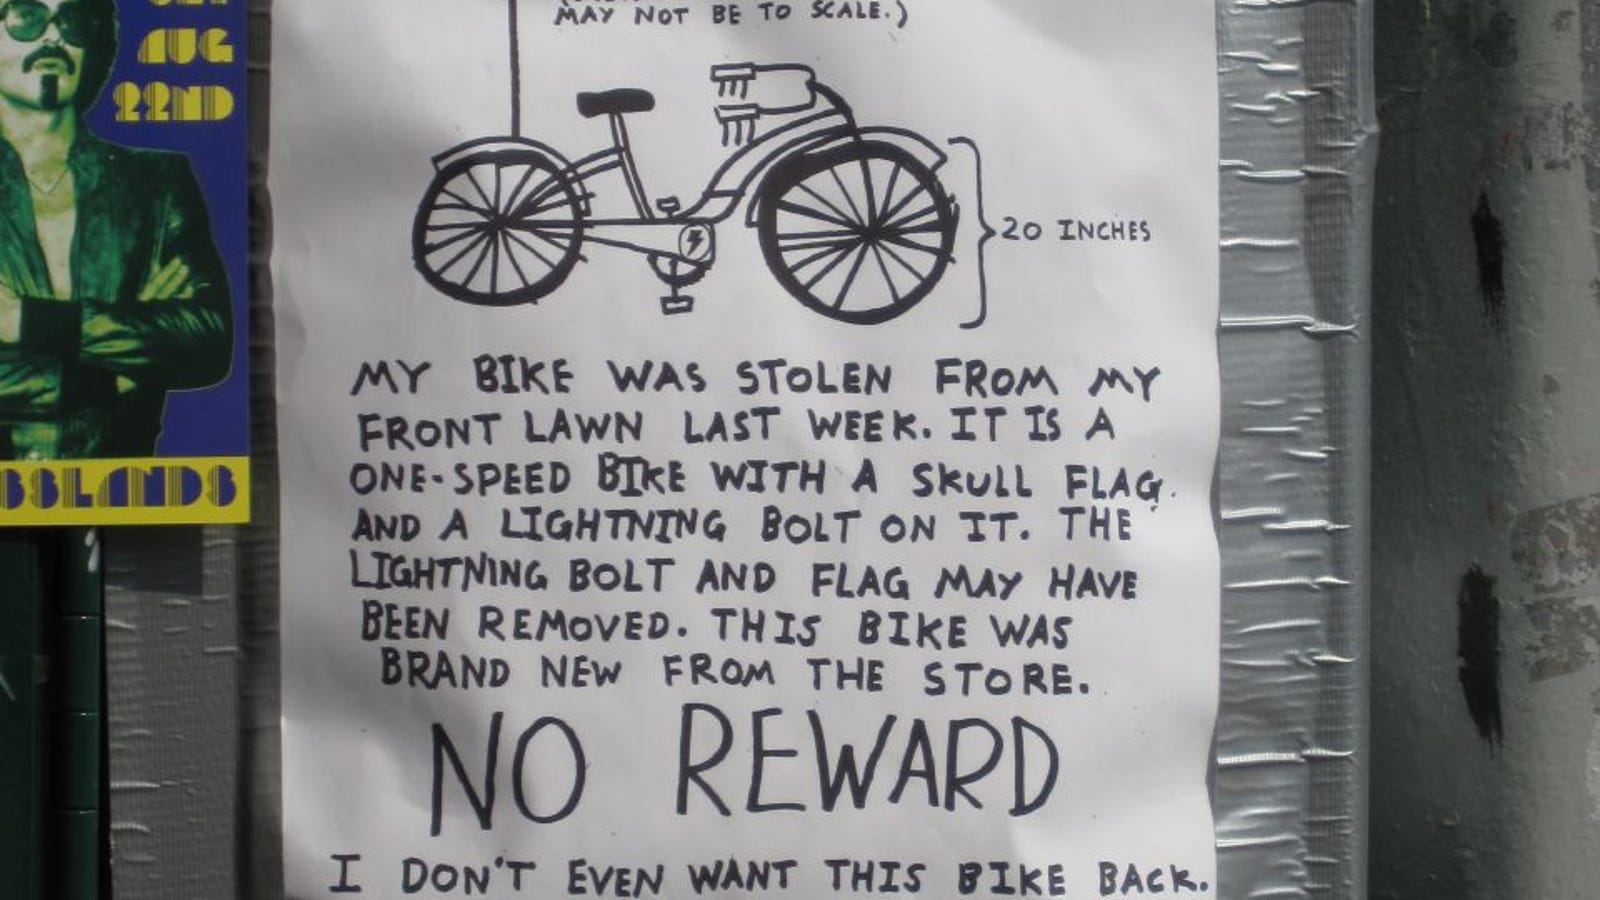 Bike Owner To Bike Thief: Truck Off And Die